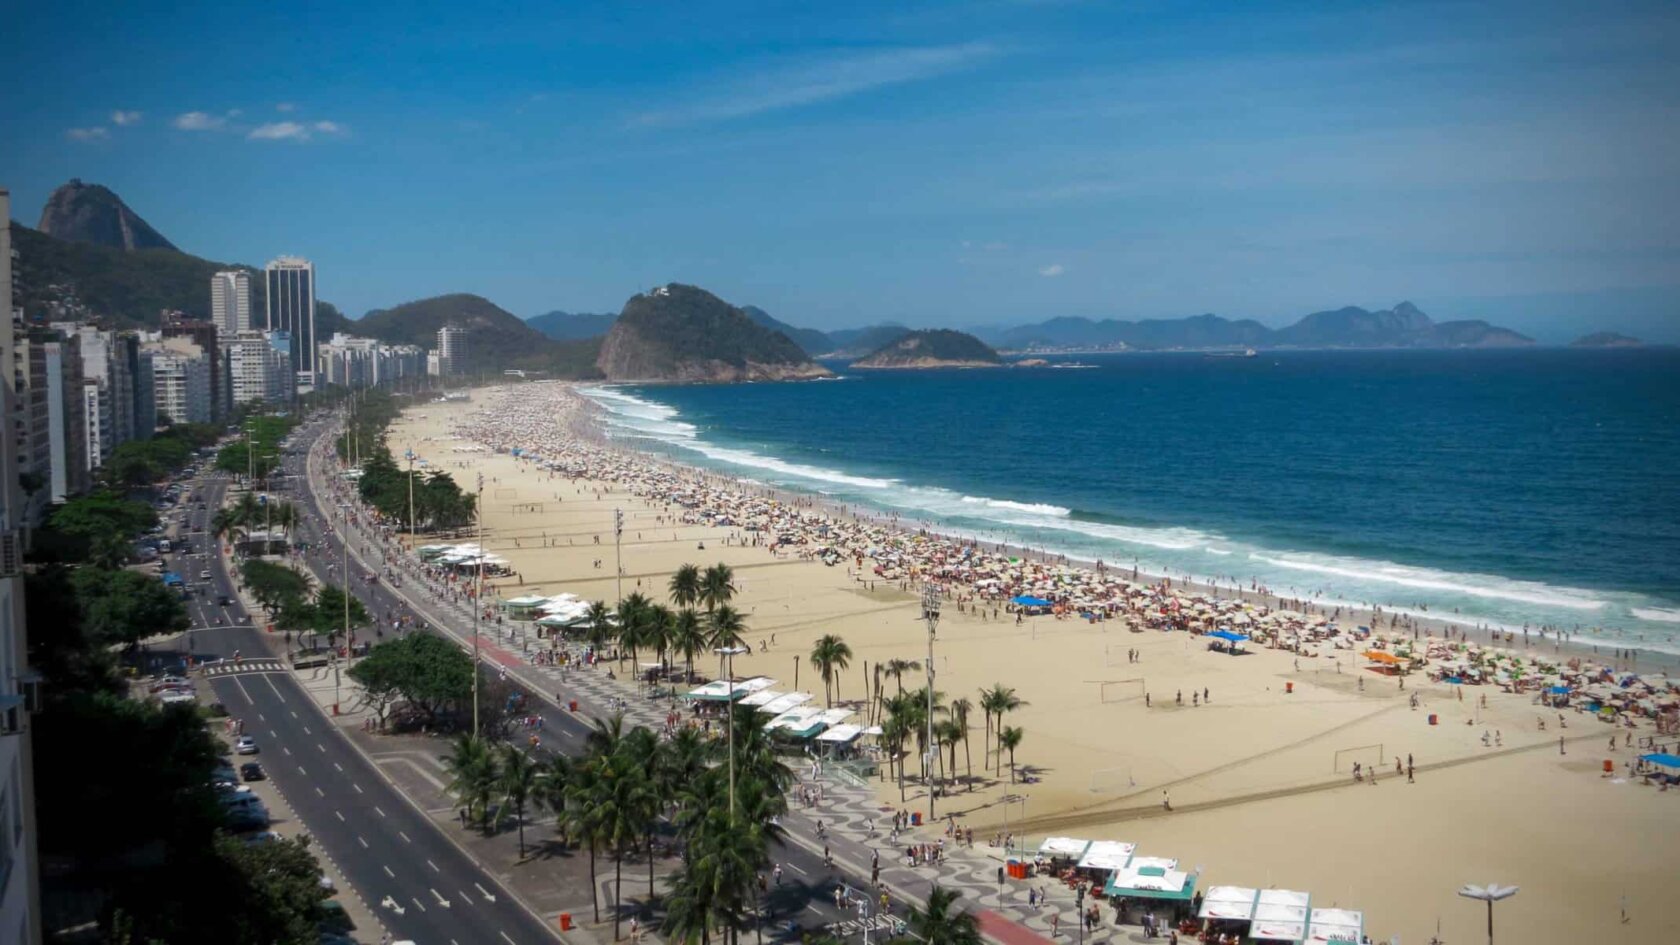 The iconic beach in Rio